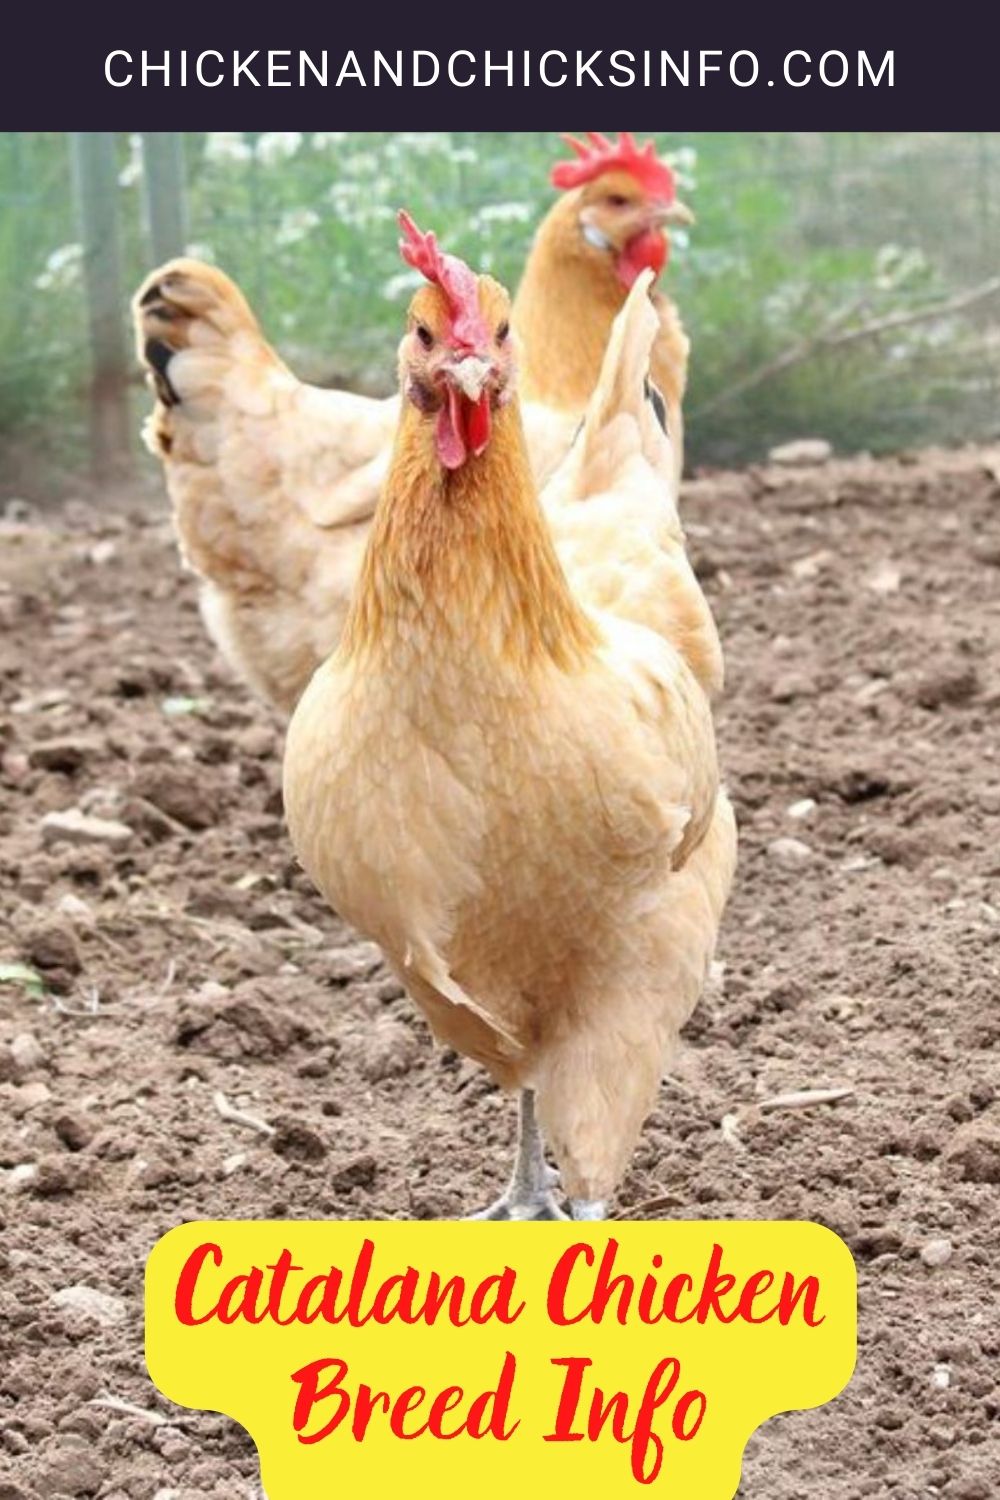 Catalana Chicken Breed Info pinterst image.